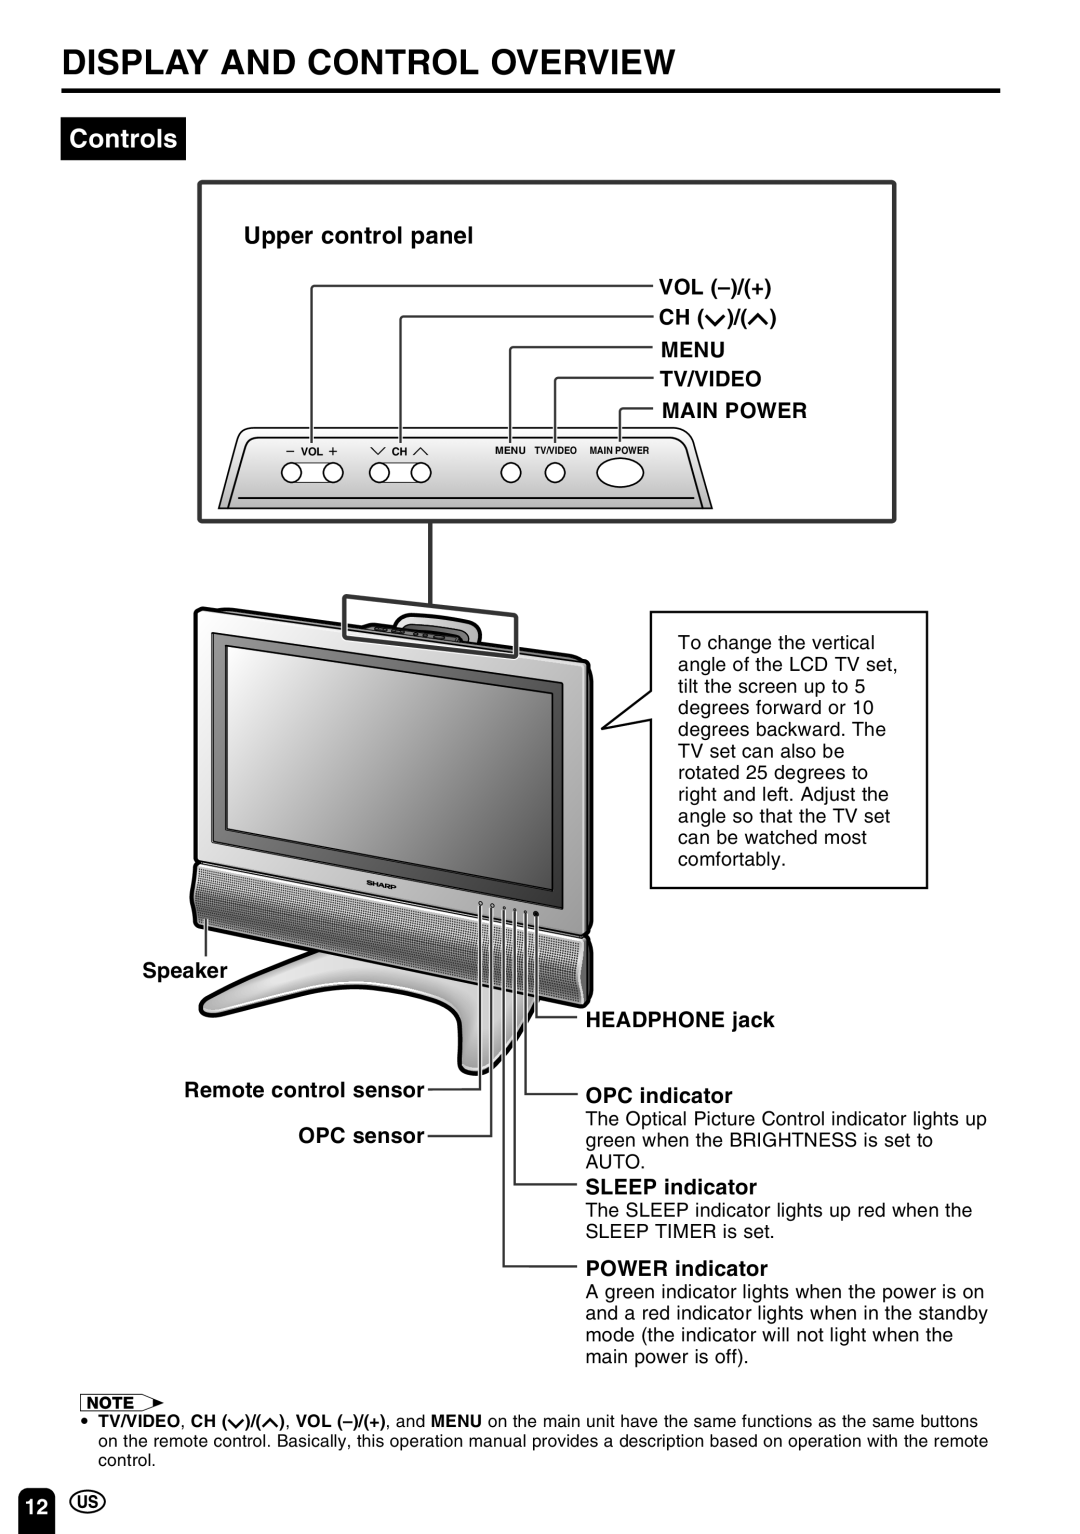 Sharp LC-22SV6U Display And Control Overview, Controls, Vol -/+ Ch Menu Tv/Video Main Power, HEADPHONE jack OPC indicator 